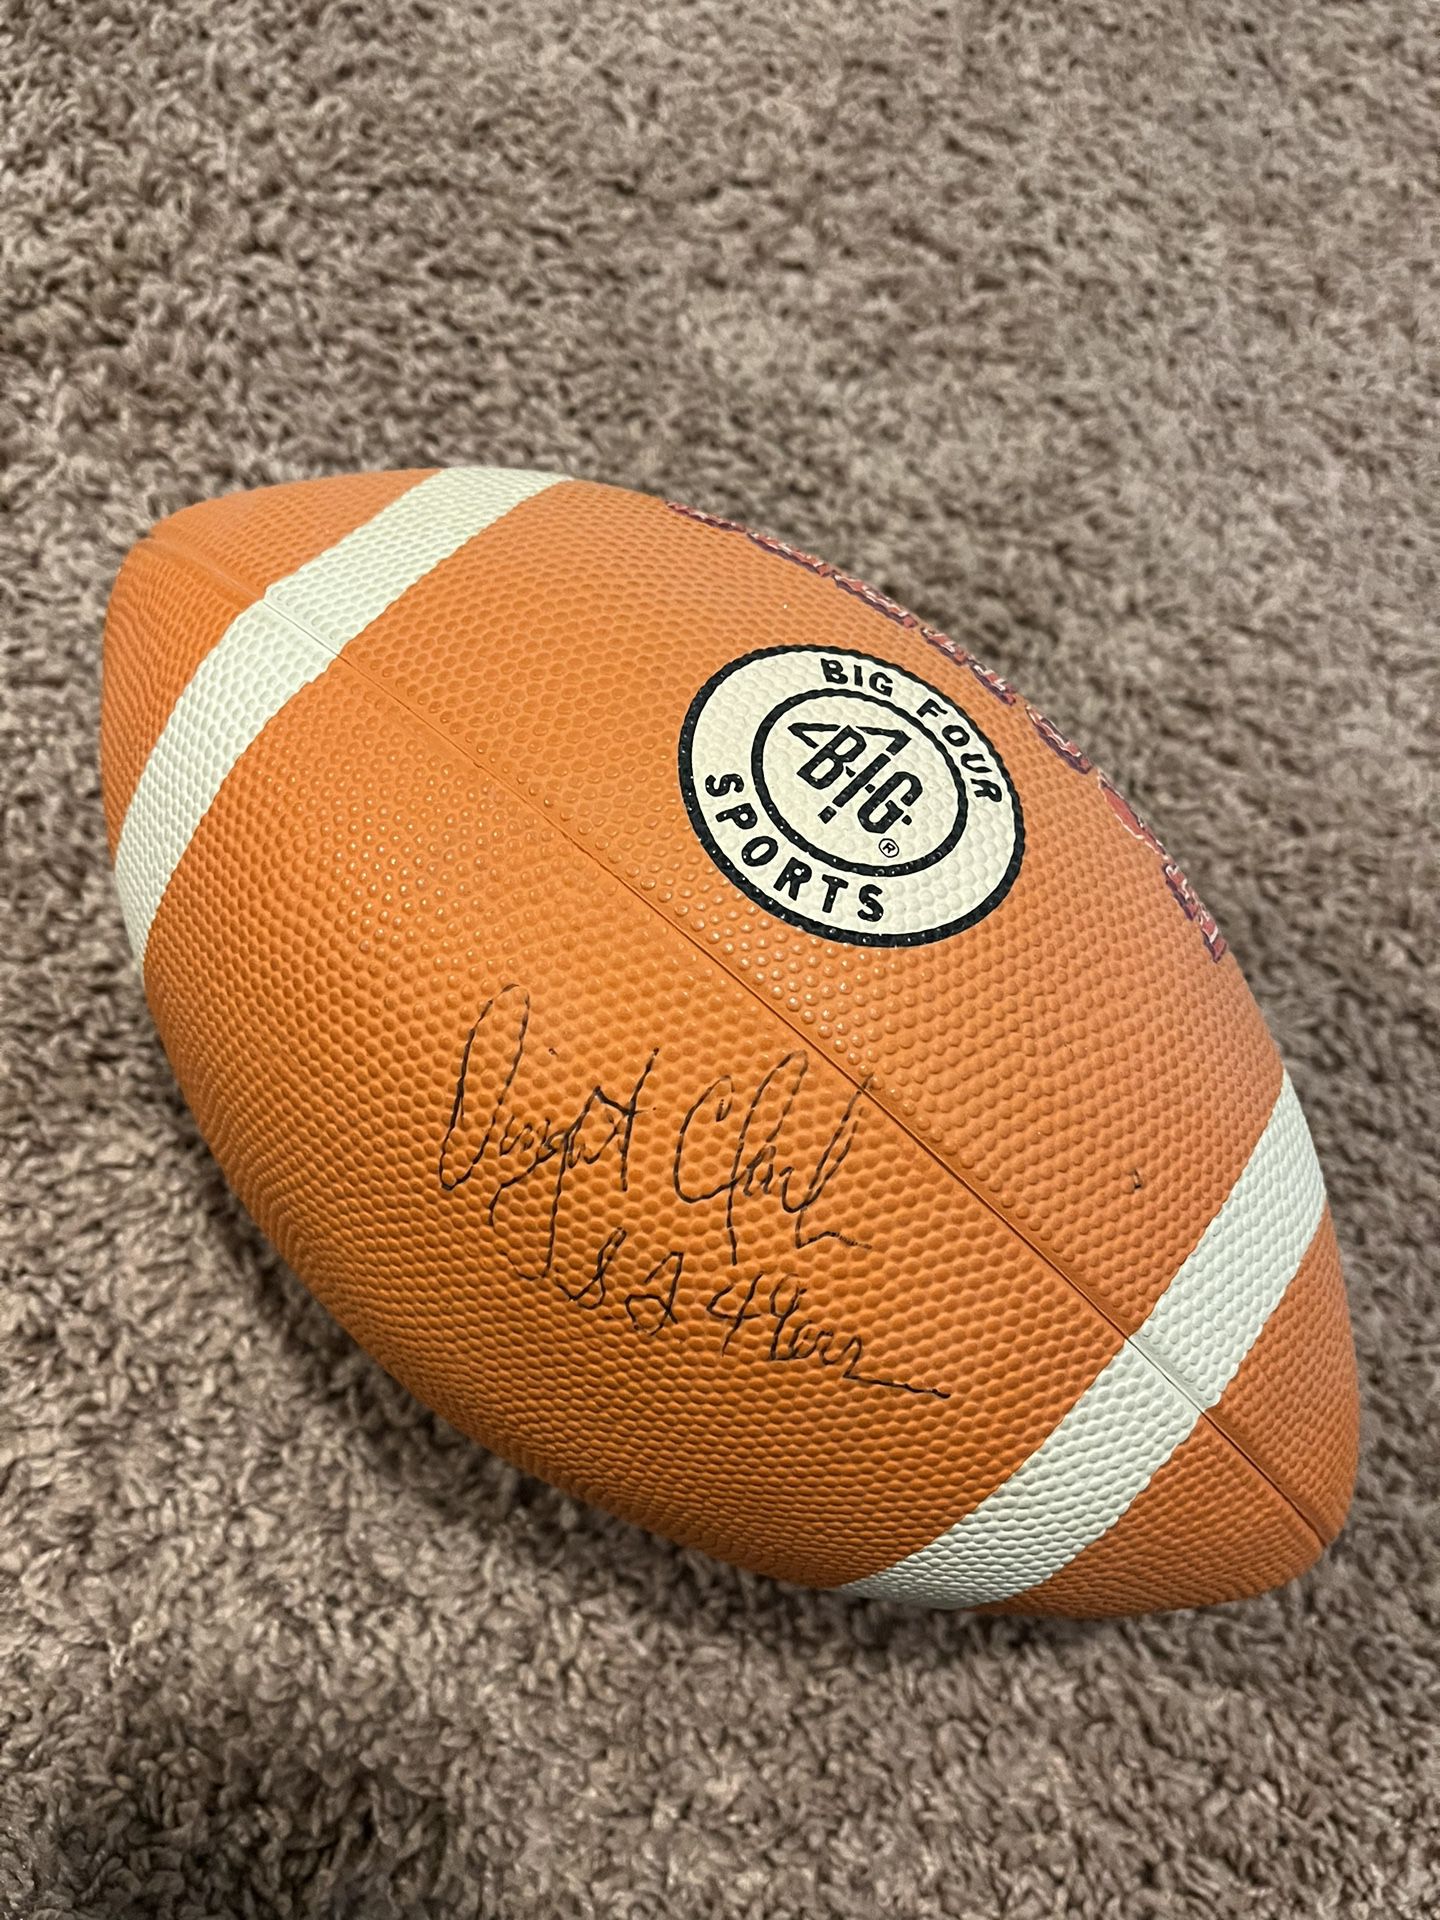 Dwight Clark autographed Clemson football 